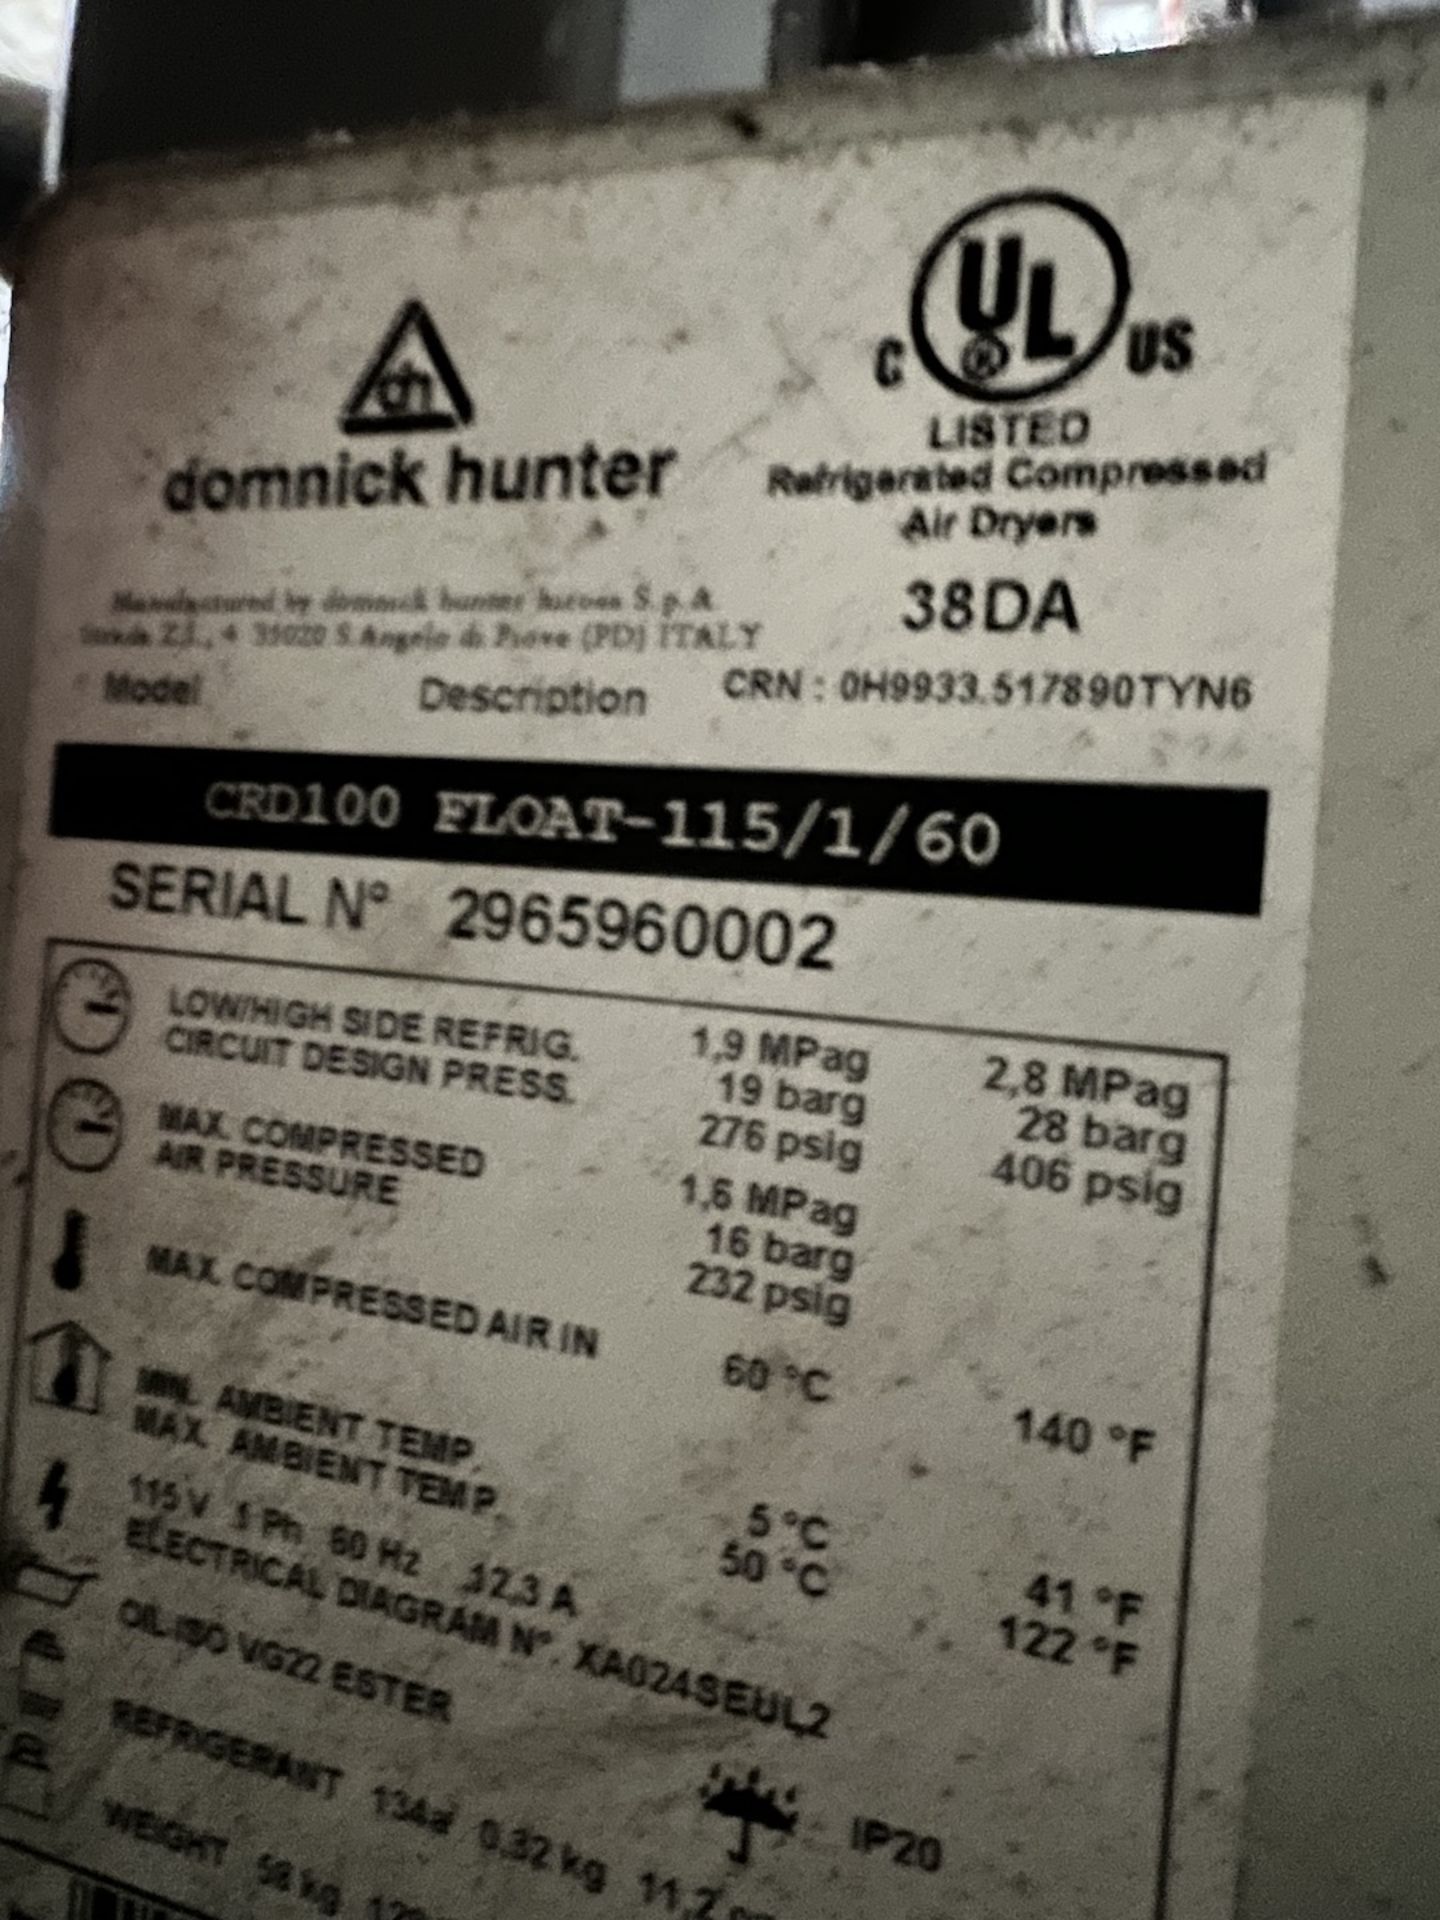 DOMNICK HUNTER AIR DRYER, MODEL CRD100 FLOAT-115/1/60 (SIMPLE LOADING FEE $275) - Image 3 of 4